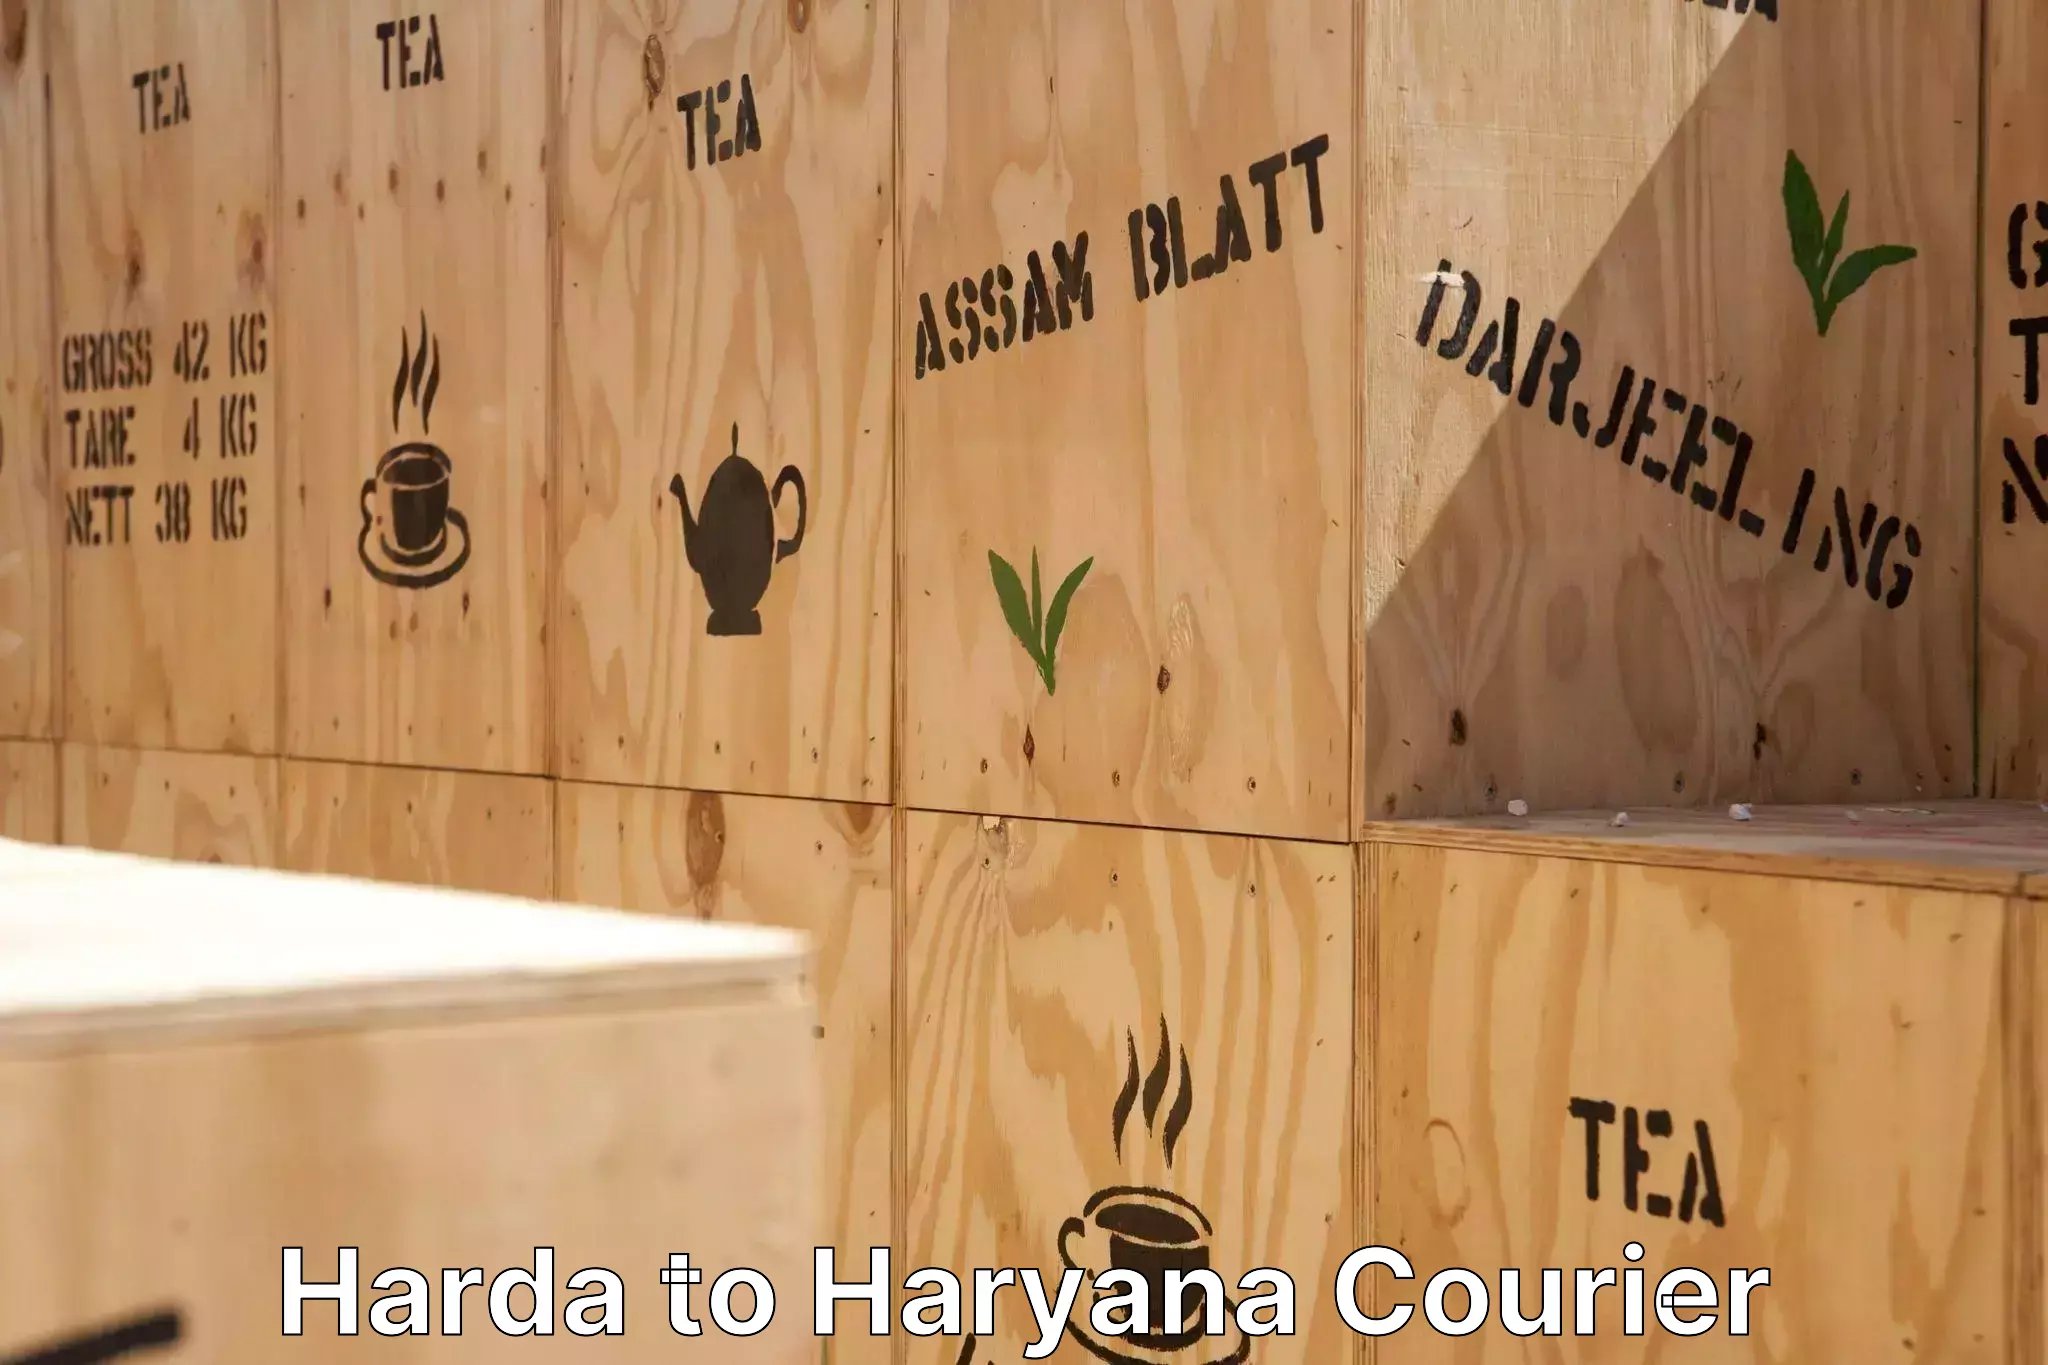 Home relocation and storage Harda to NCR Haryana